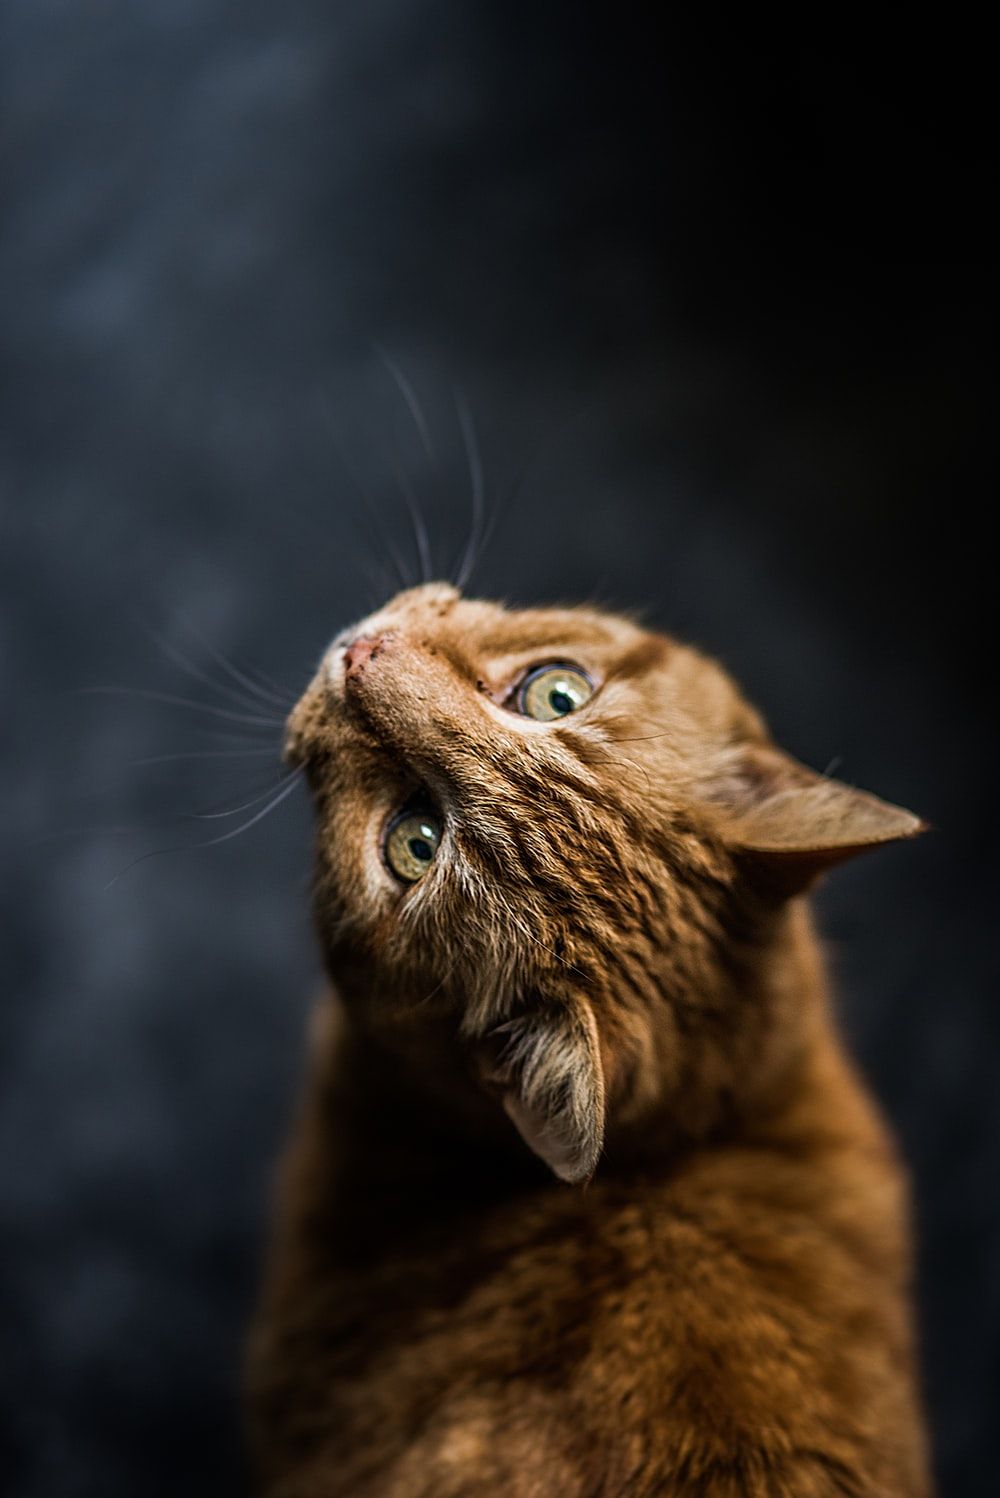 Orange Cat Picture. Download Free Image